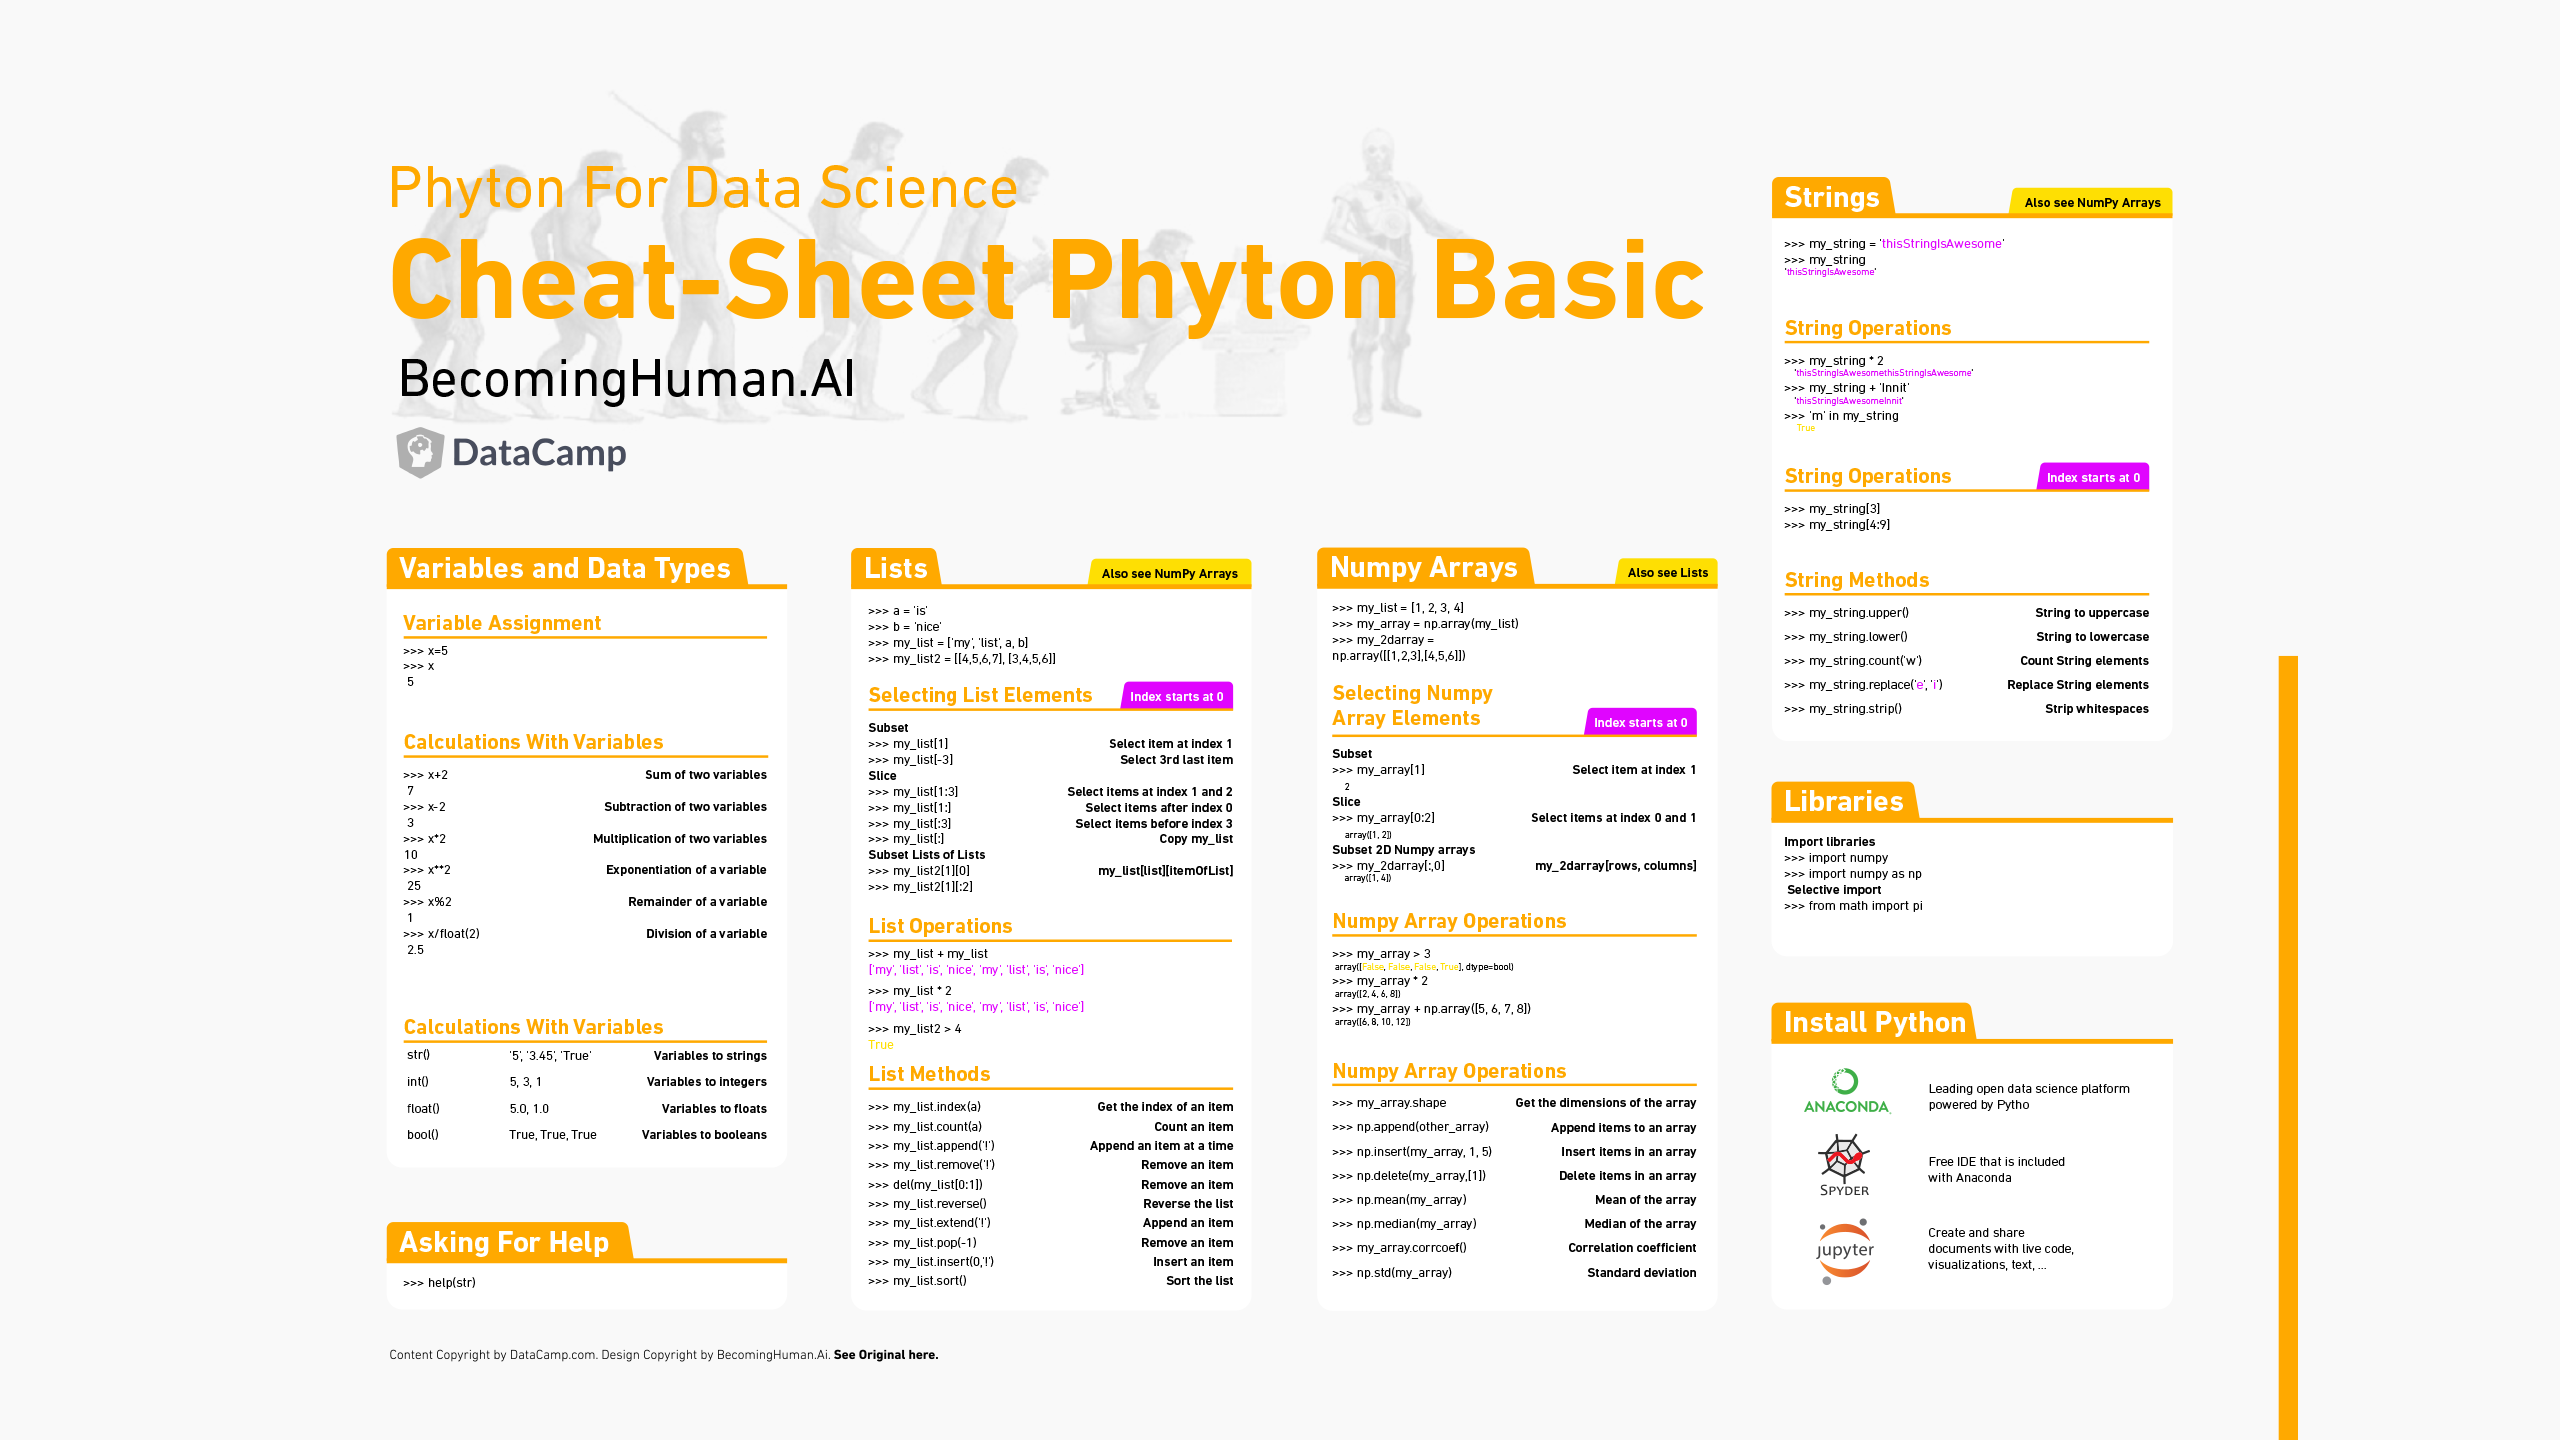 Str methods. Python Cheat Sheet. Numpy Python шпаргалка. Python Cheat Sheet Basic. Пайтон памятка.